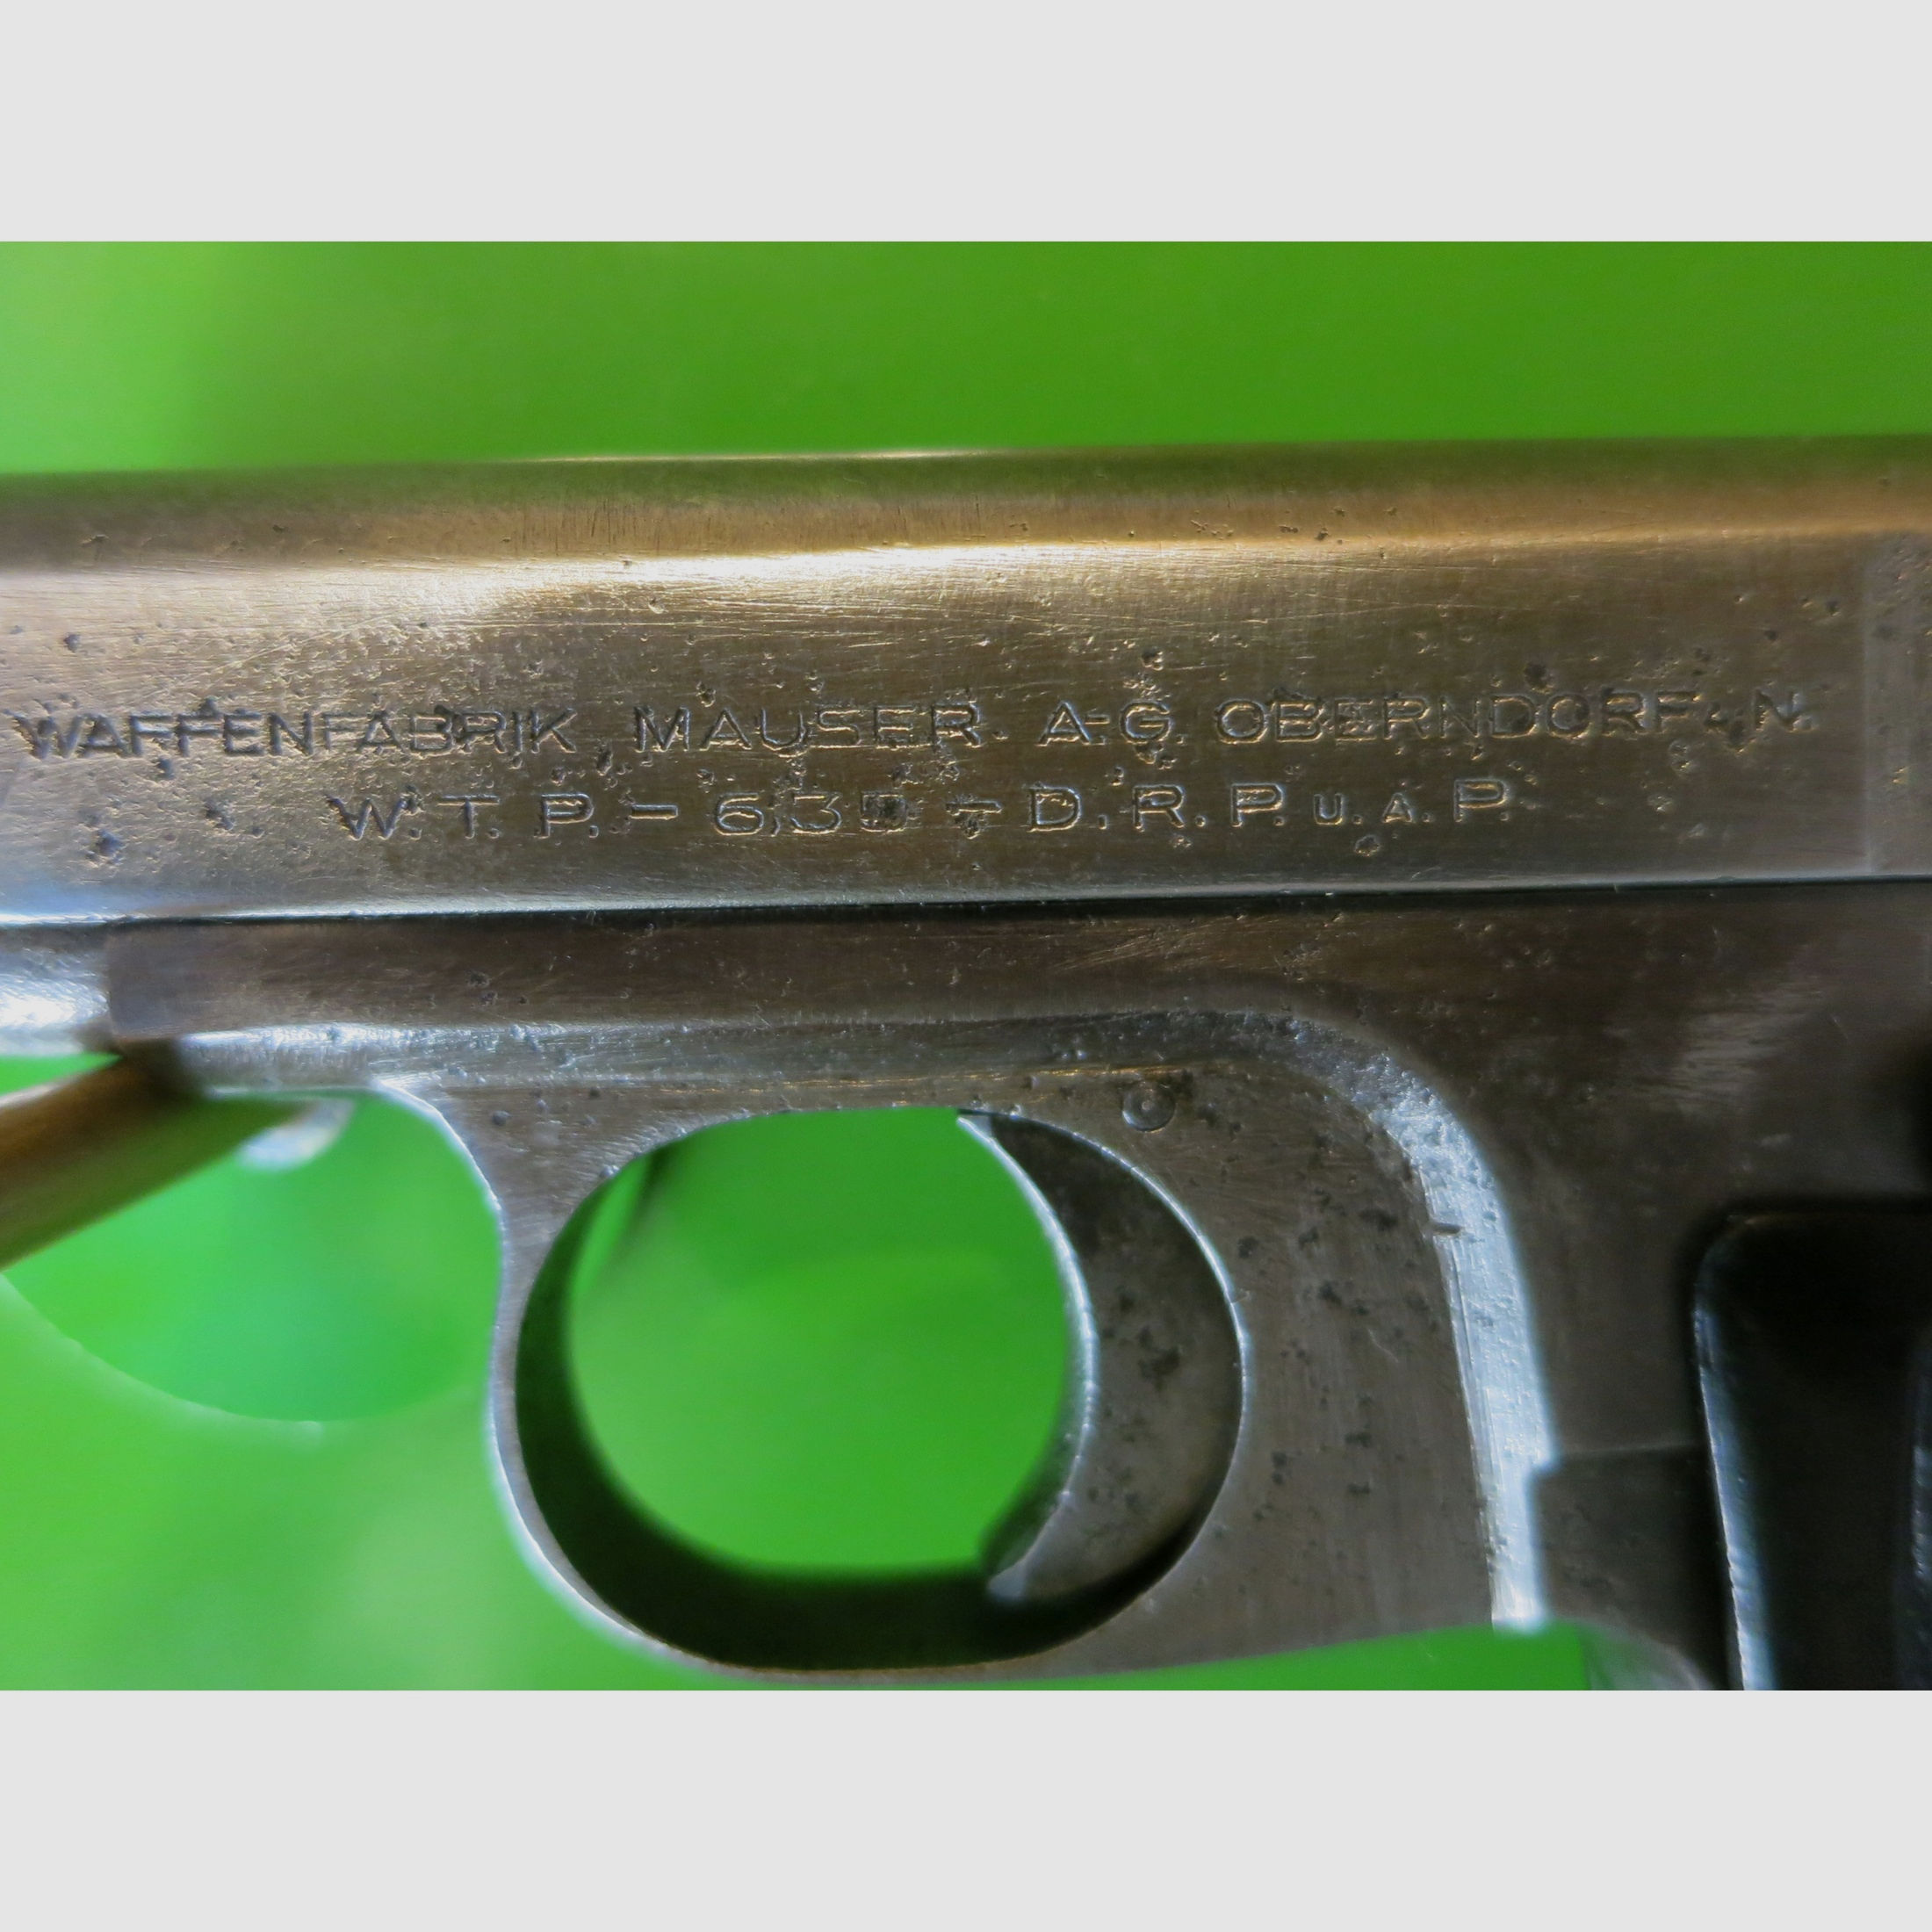 Mauser WTP 1 (Variante 3), Kaliber 6,35 mm, MAUSER-WERKE A.-G. OBERNDORF A .N. WTP – 6,35 – DRPuAP     #79